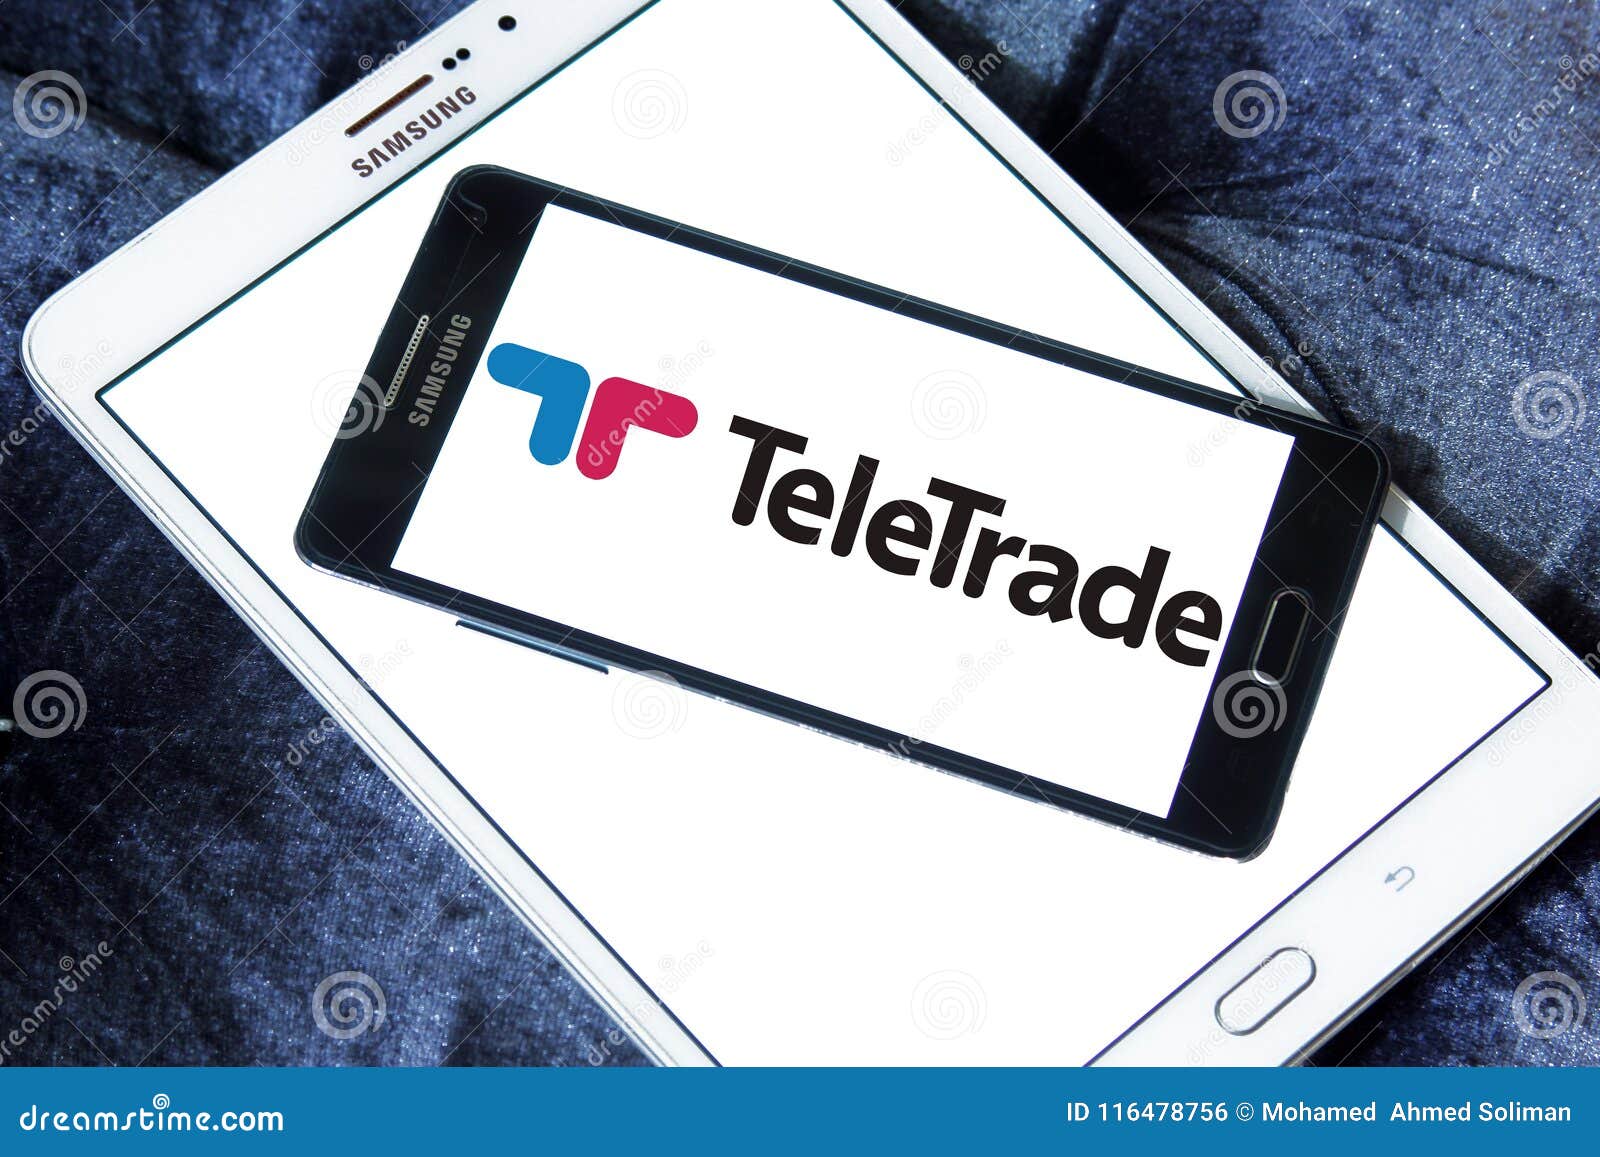 Teletrade Online Broker Logo Editorial Photo Image Of Brands - 